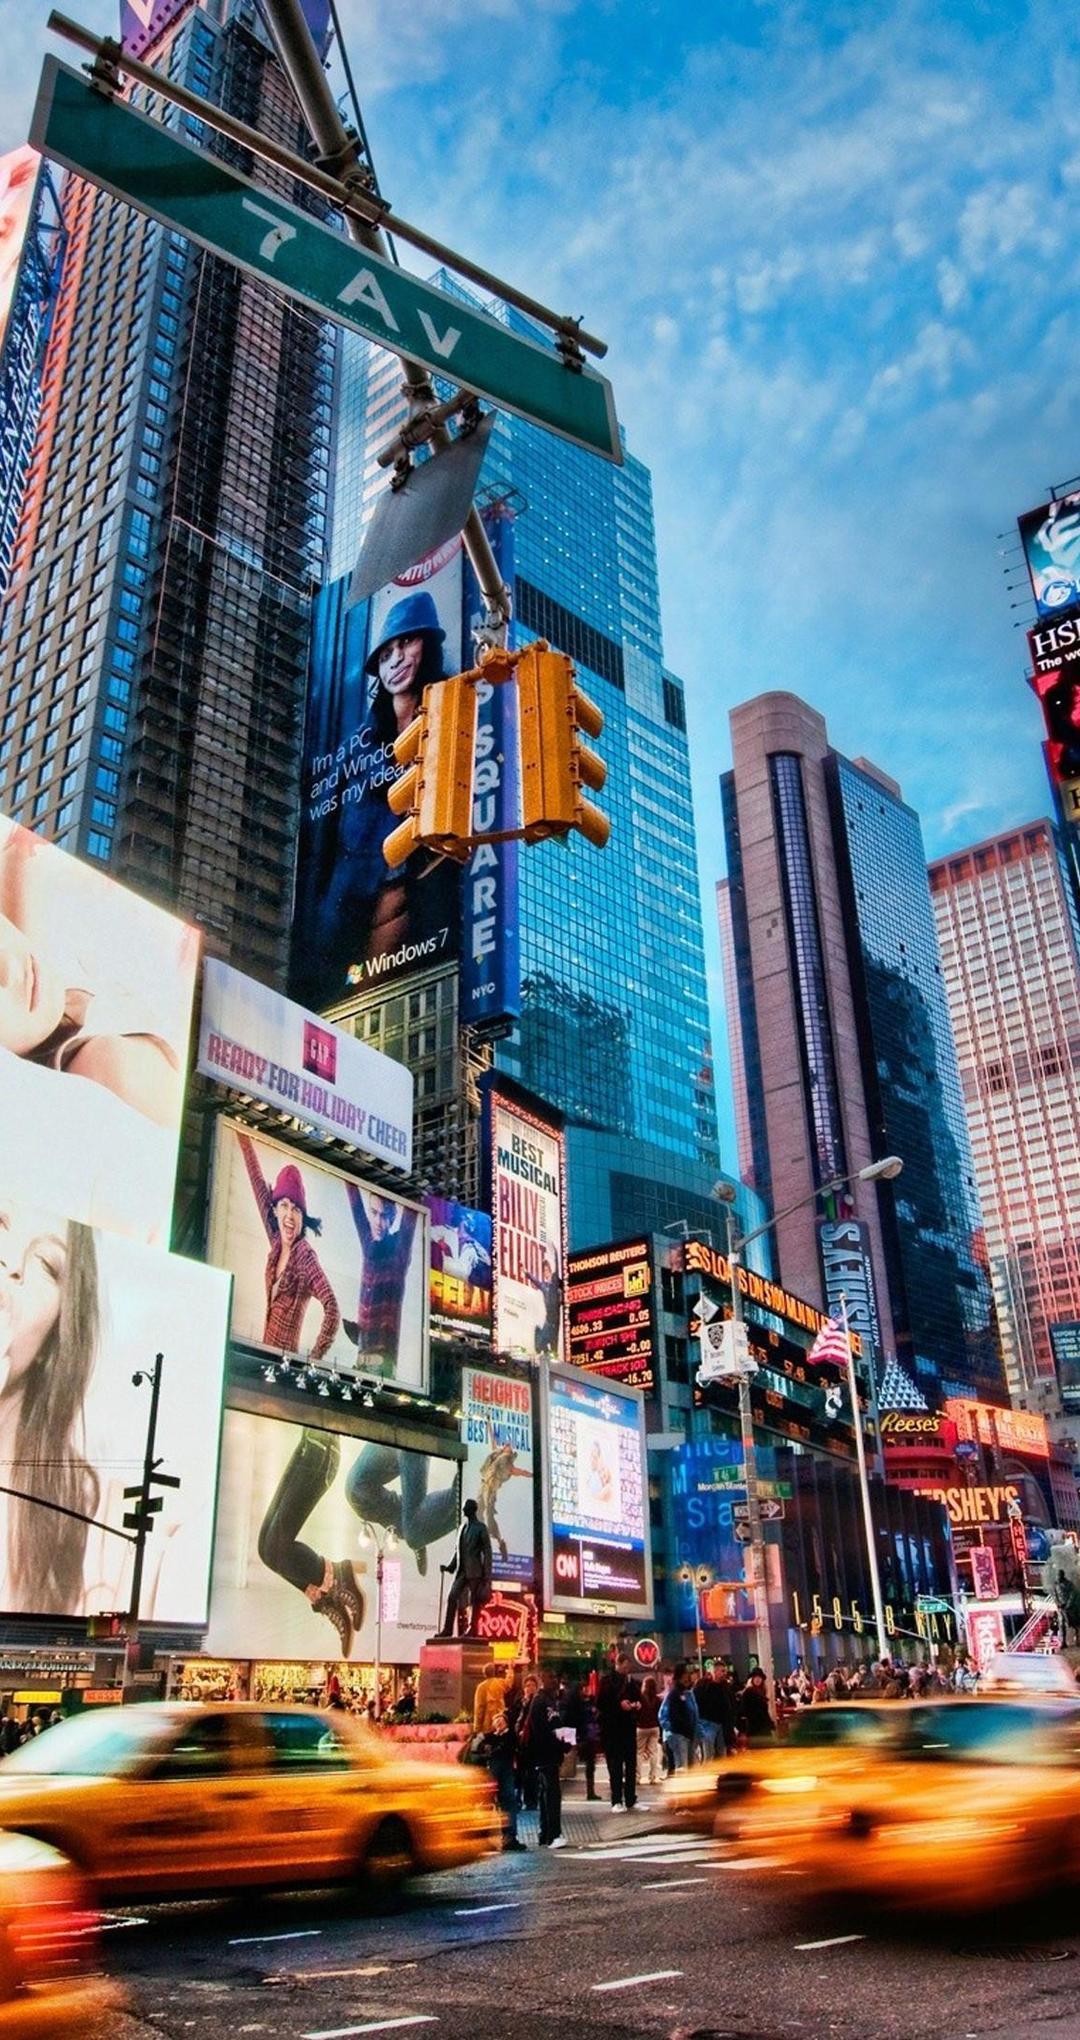 Times Square NYC 4K UltraHD Wallpaper. Wallpaper Studio 10. Tens